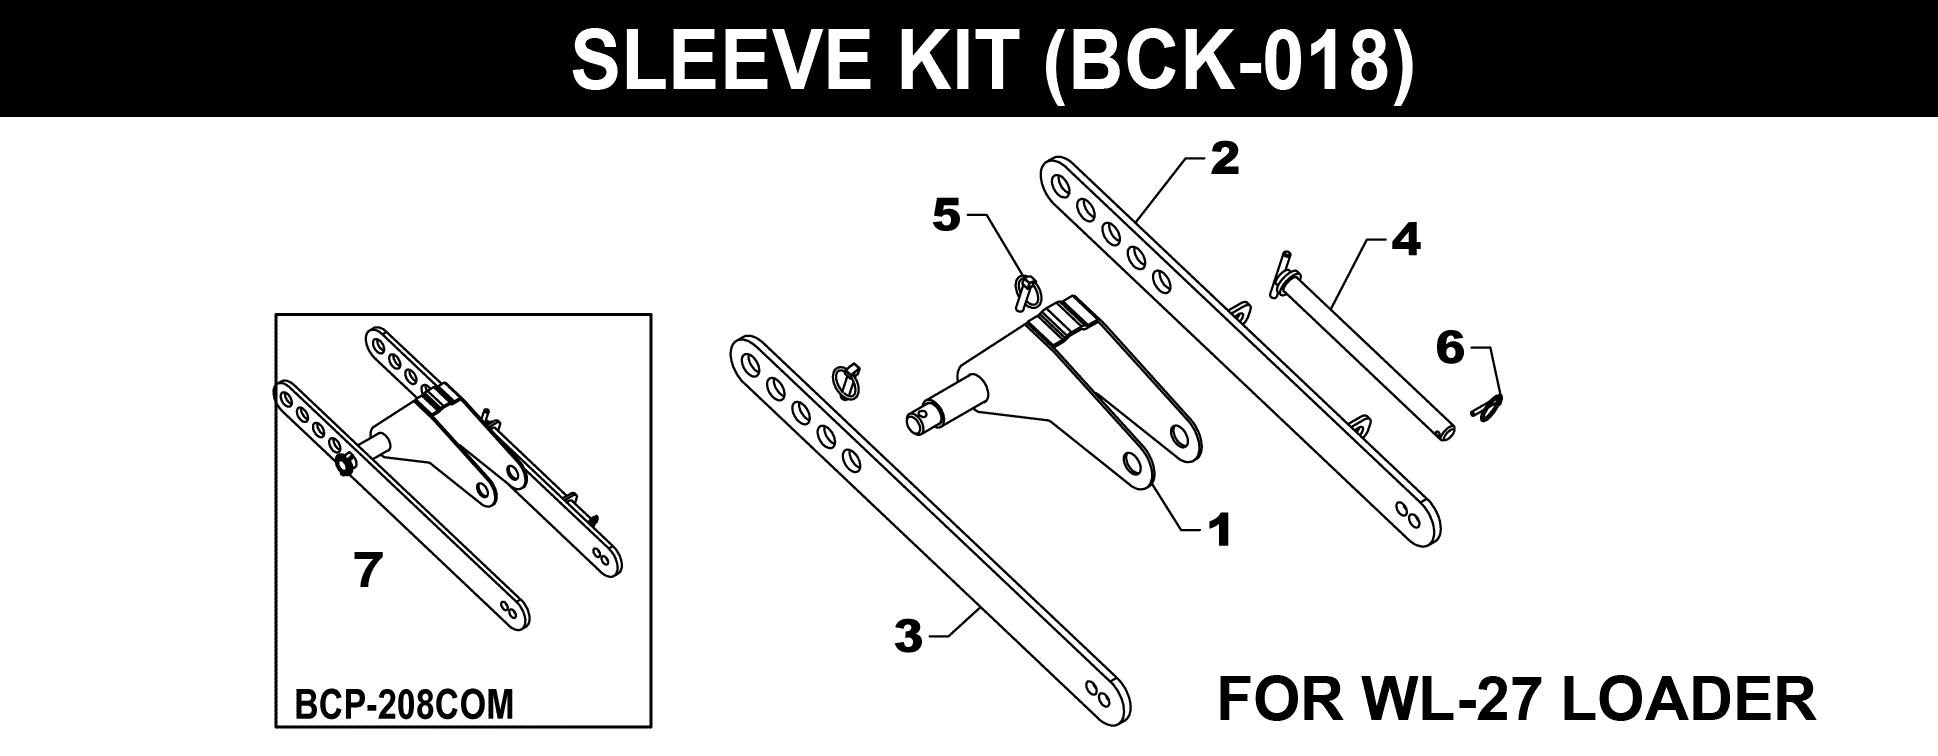 BCK-018 Sleeve Kit